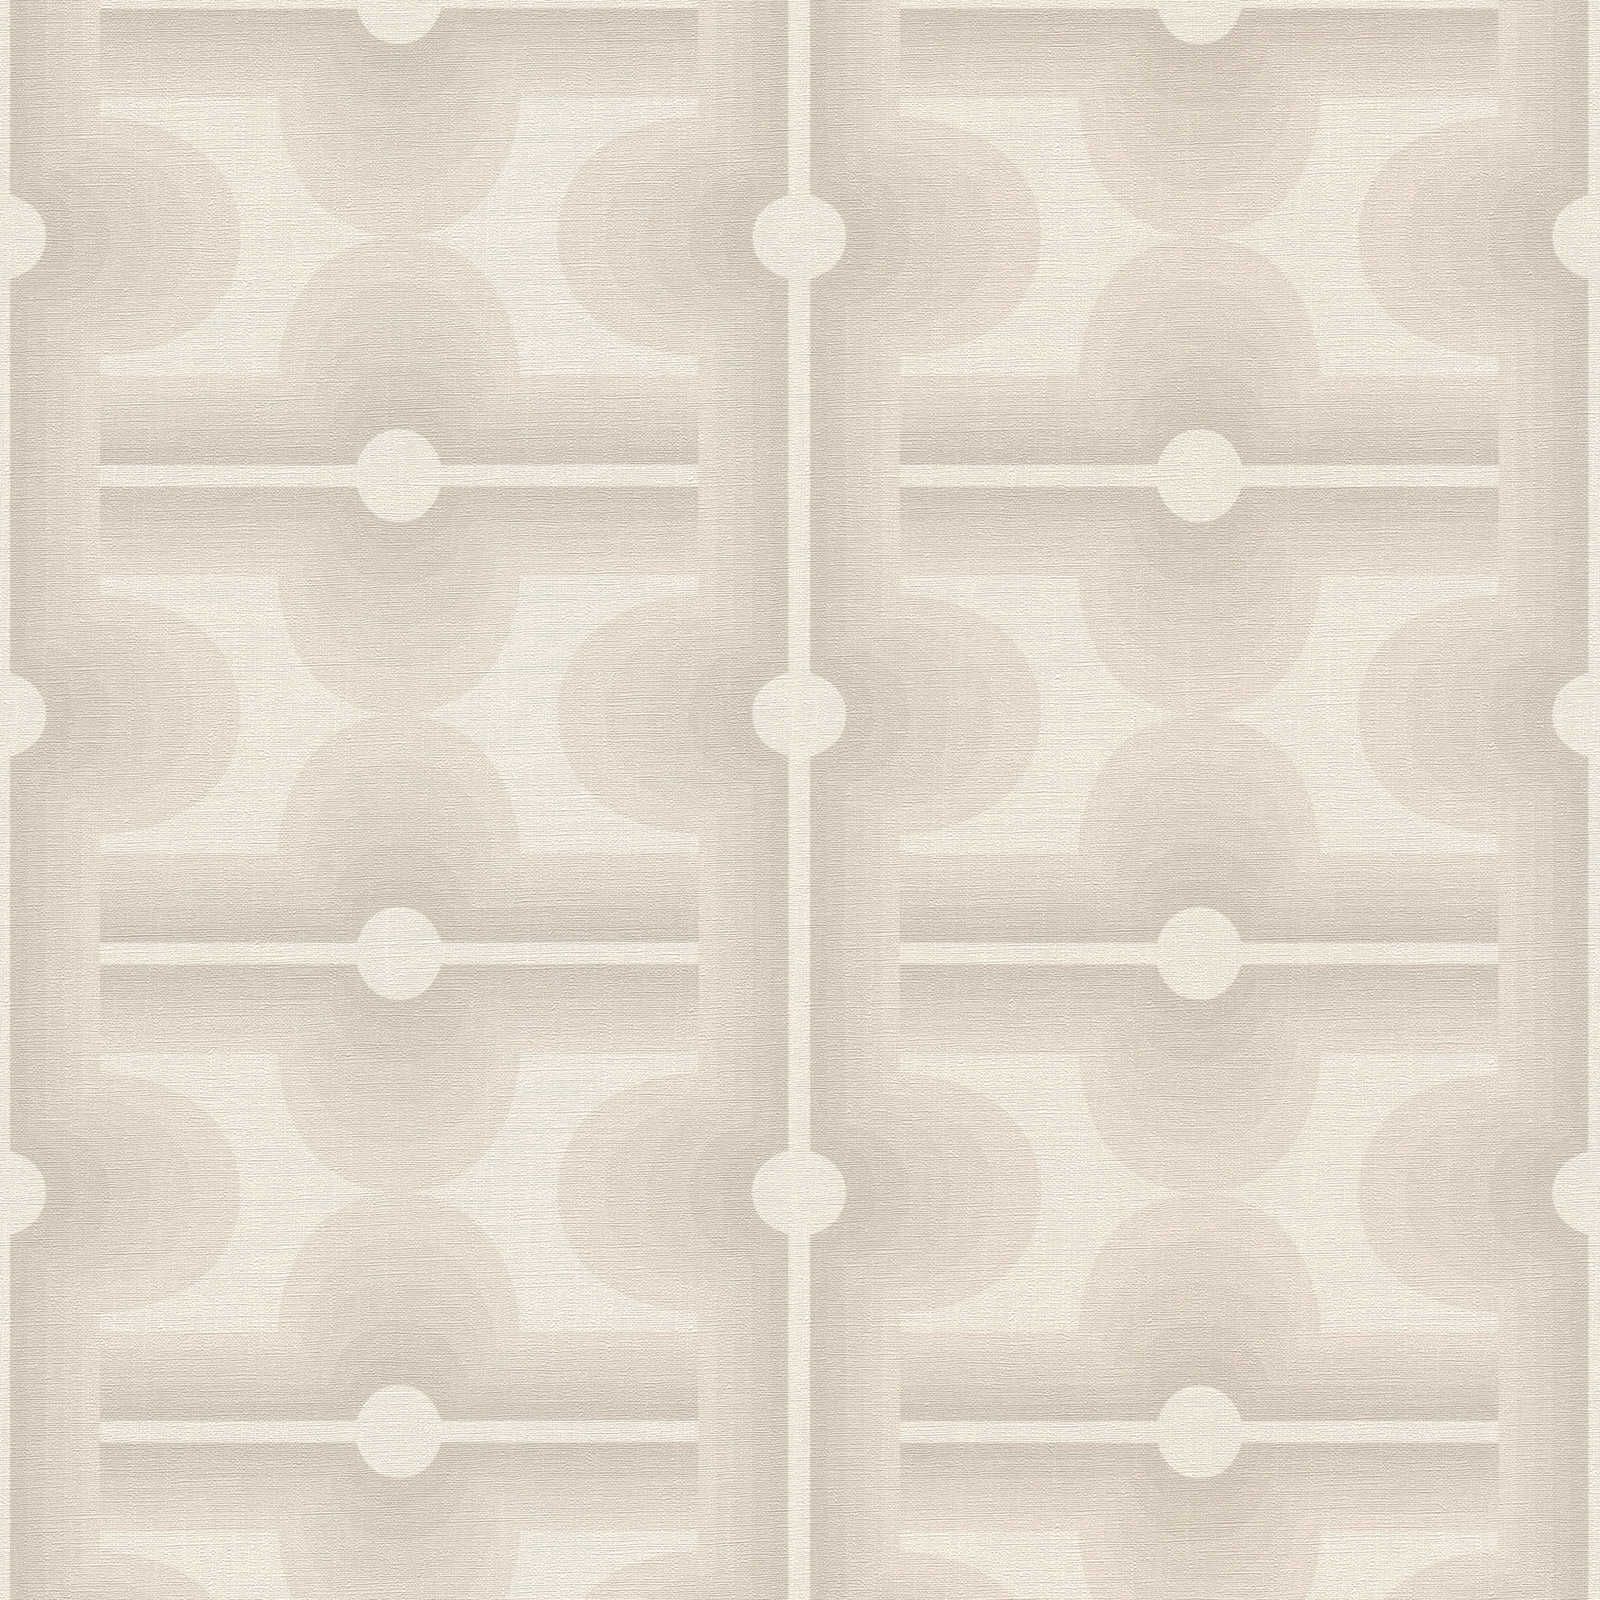             Abstracte Retro Stijlpatronen - Beige, Crème, Grijs
        